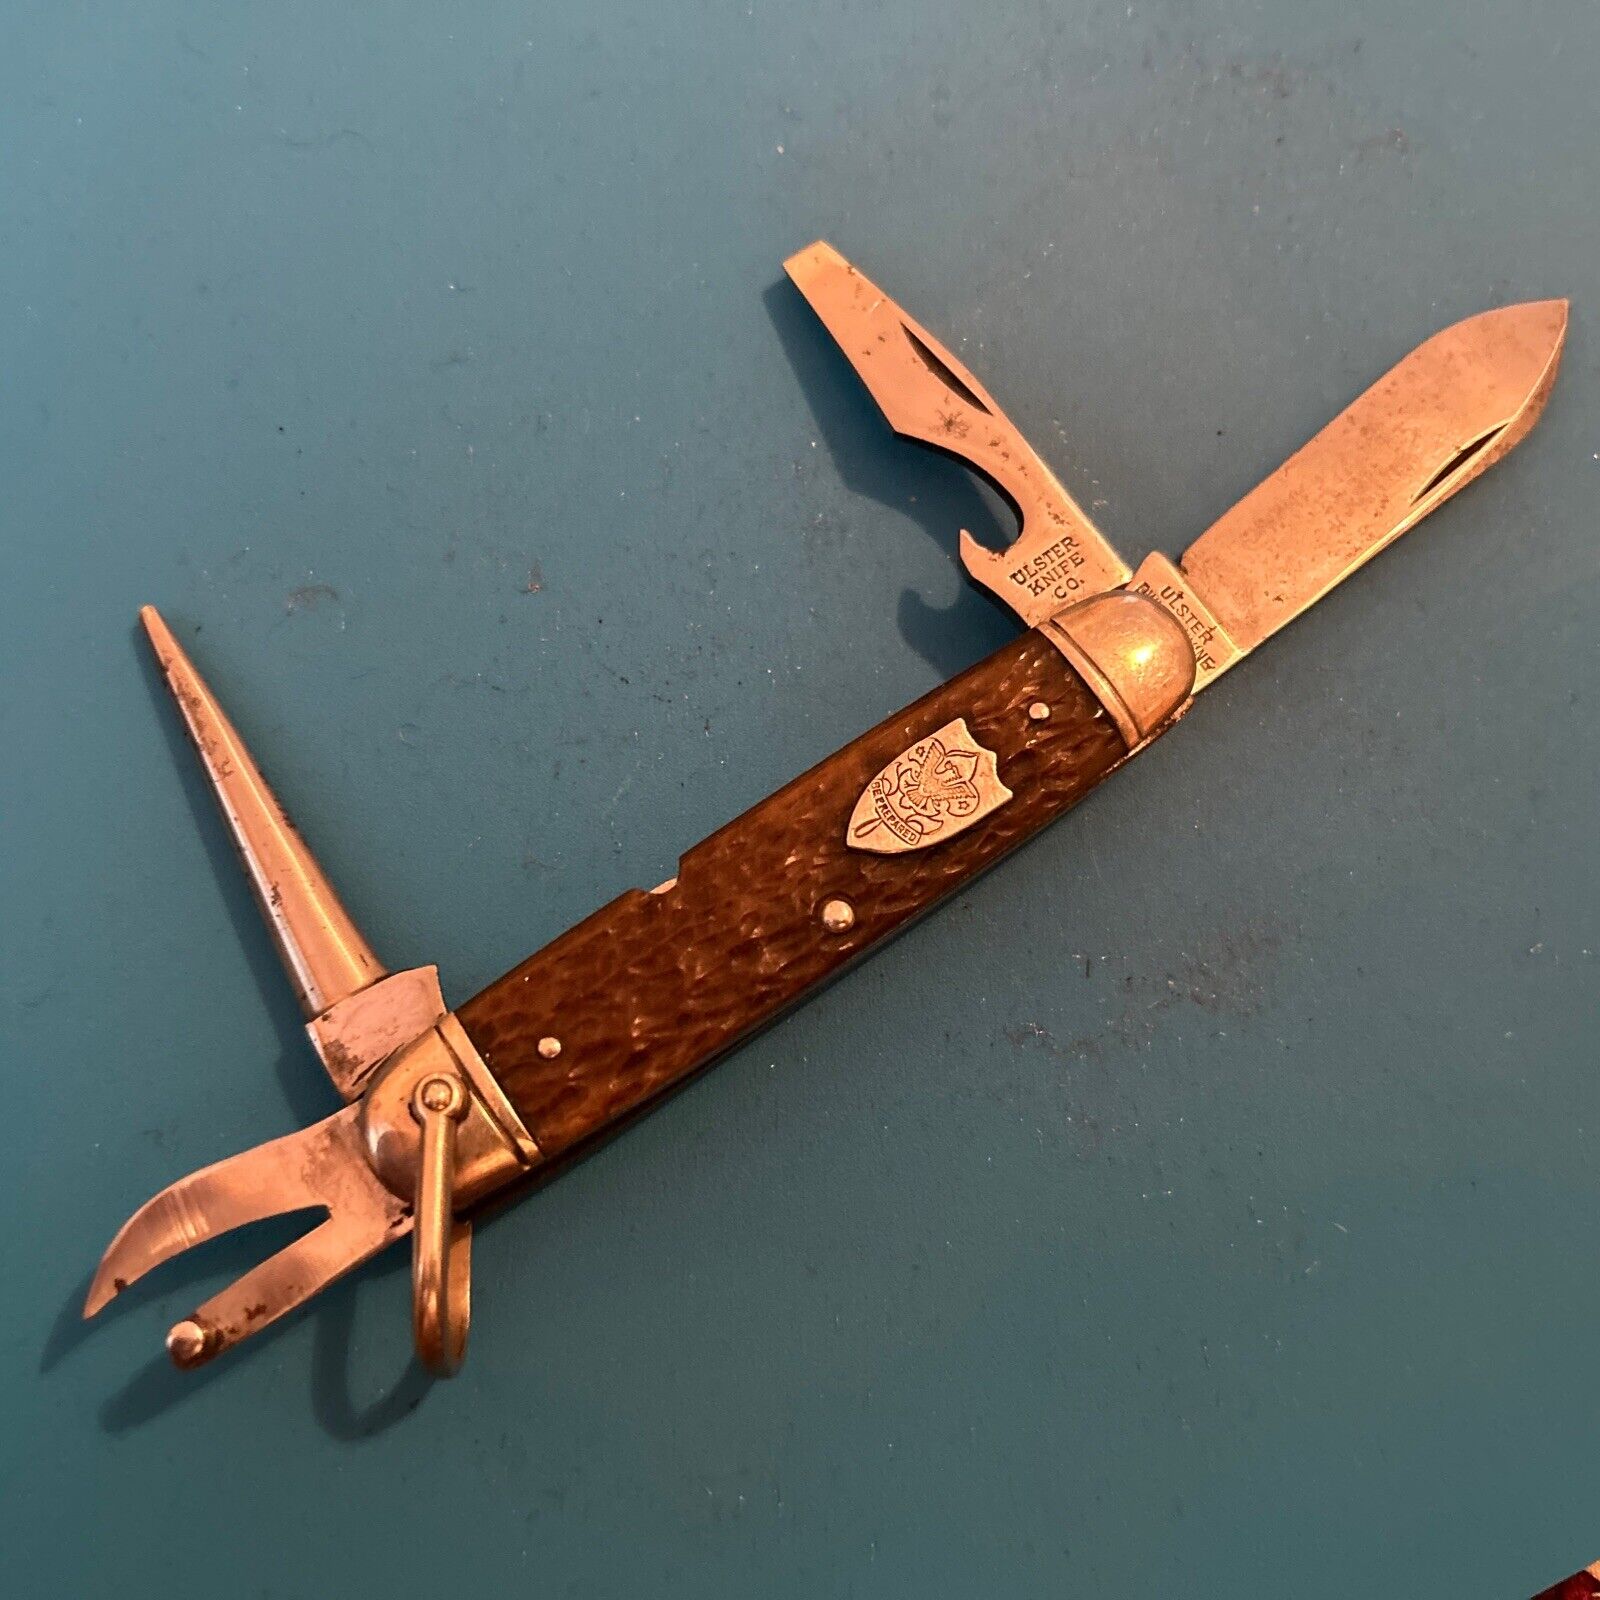 Ulster 1502 Bone Handled Boy Scout Knife, Vintage, Cutlery Snappy, Nice